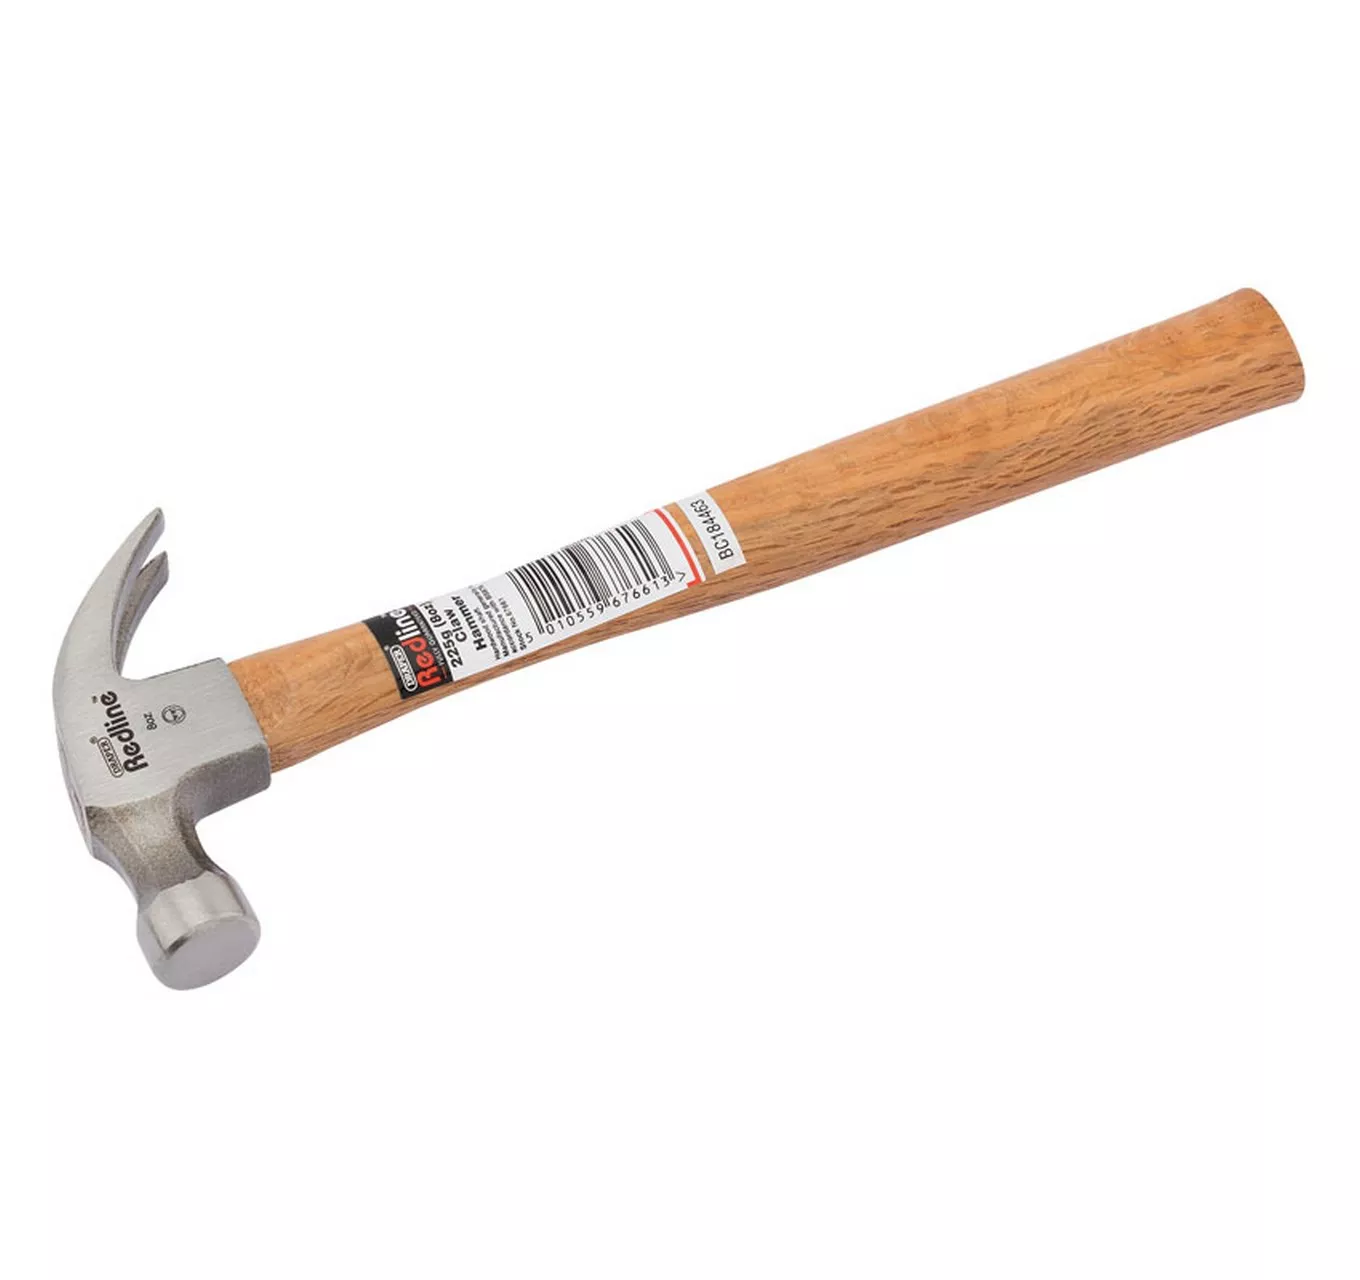 Redline Claw Hammer with Hardwood Shaft, 225g/8oz